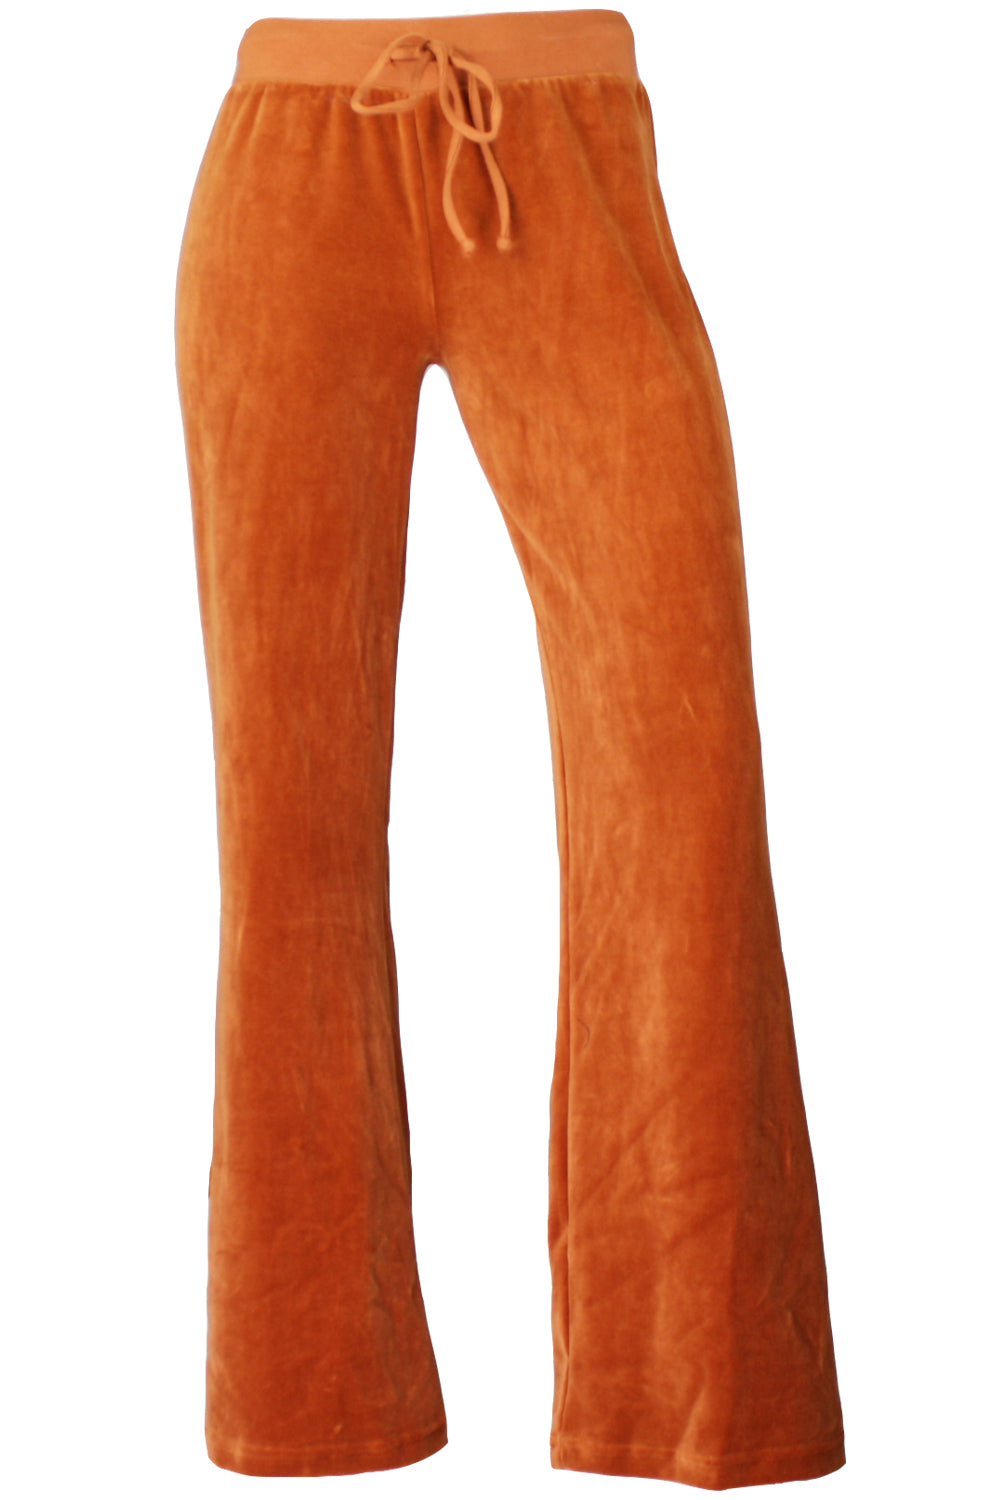 Womens Burnt Orange Velour Pants, Sweatpants